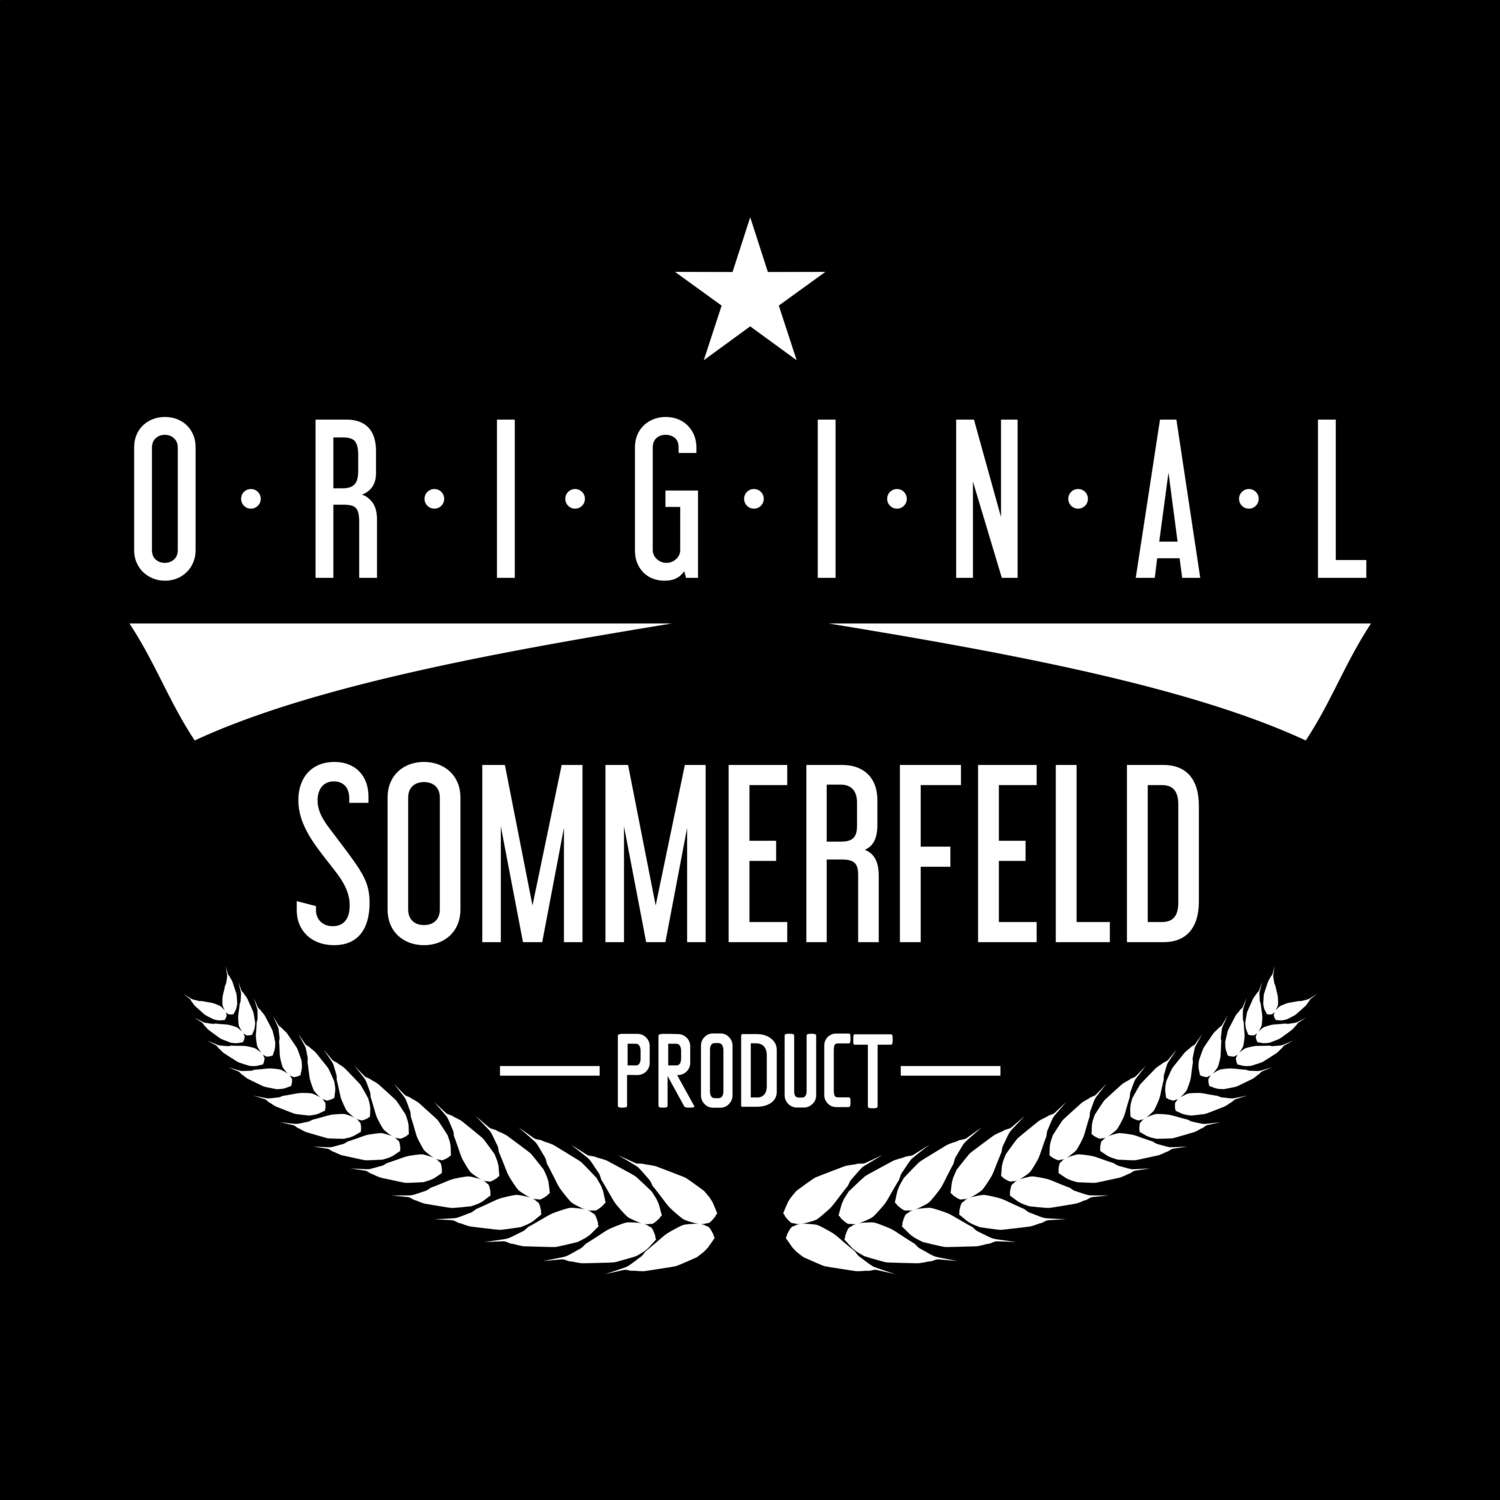 Sommerfeld T-Shirt »Original Product«